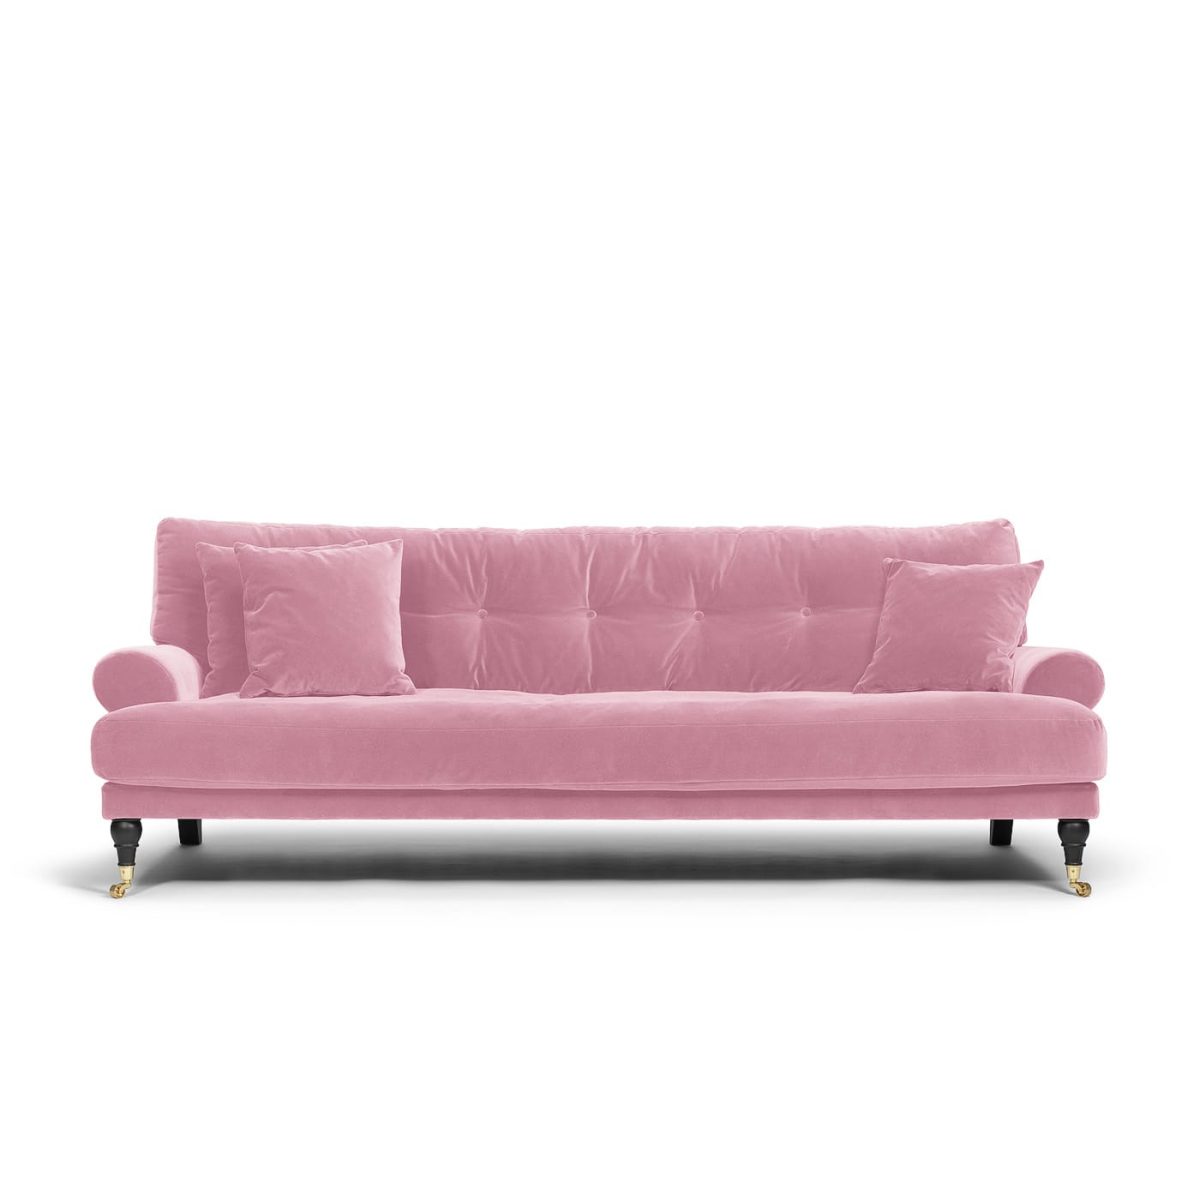 Kuddfodral Dusty Pink 50×50 cm